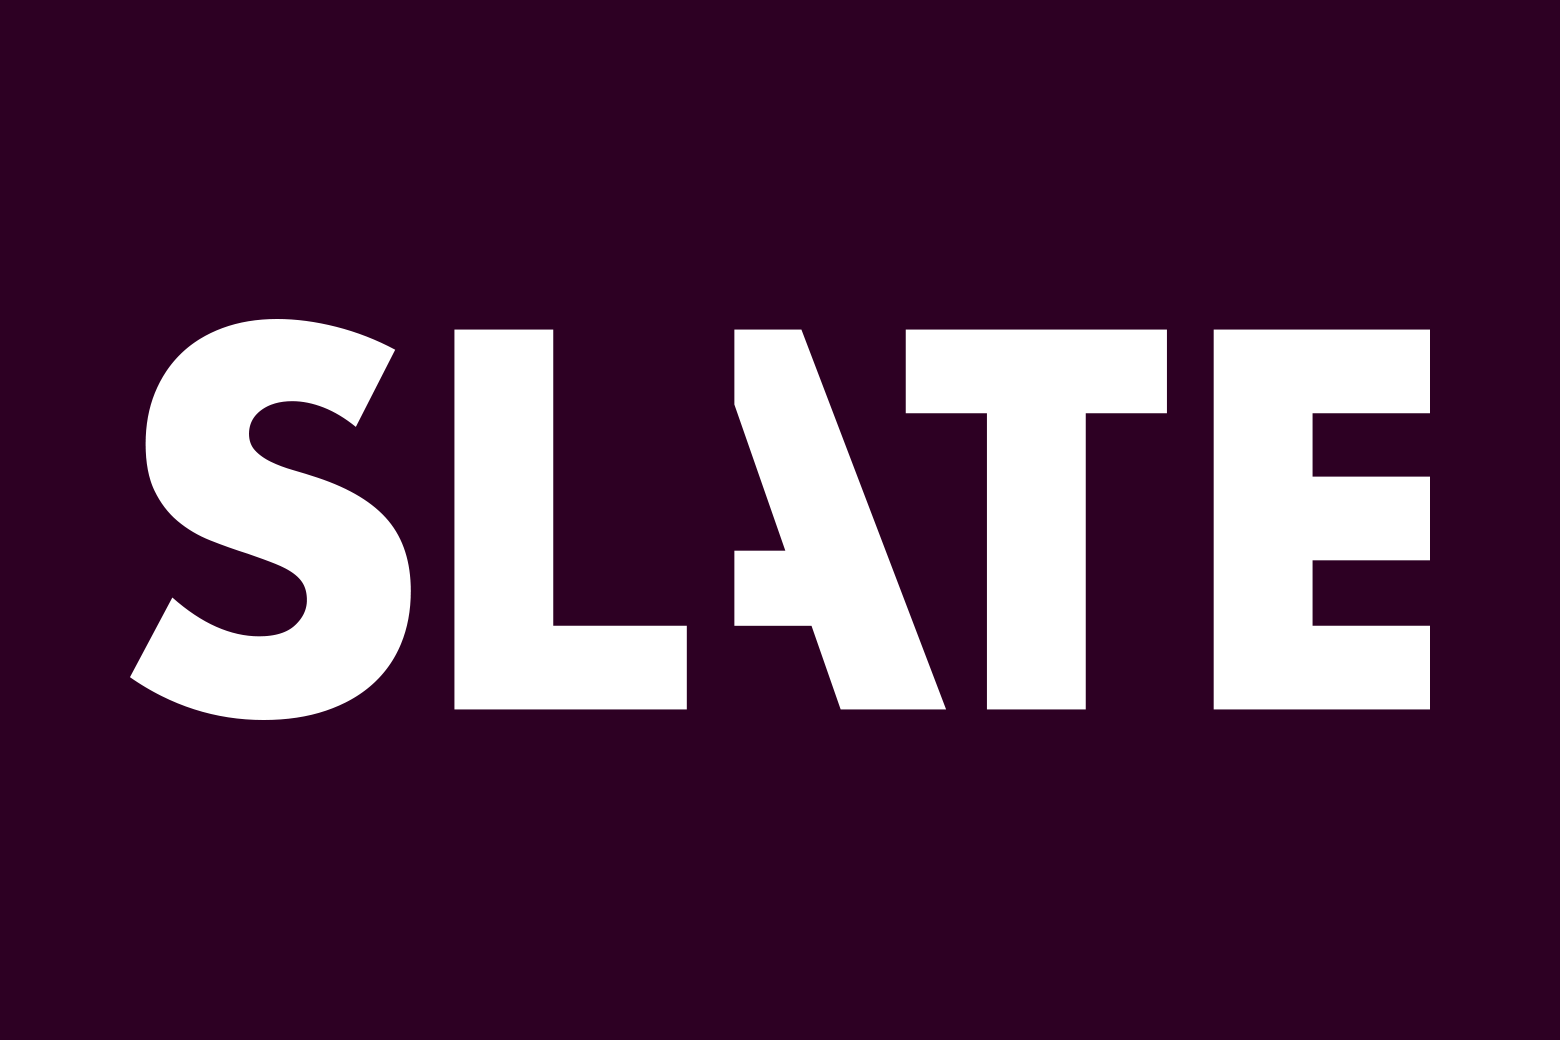 The new Slate logo.